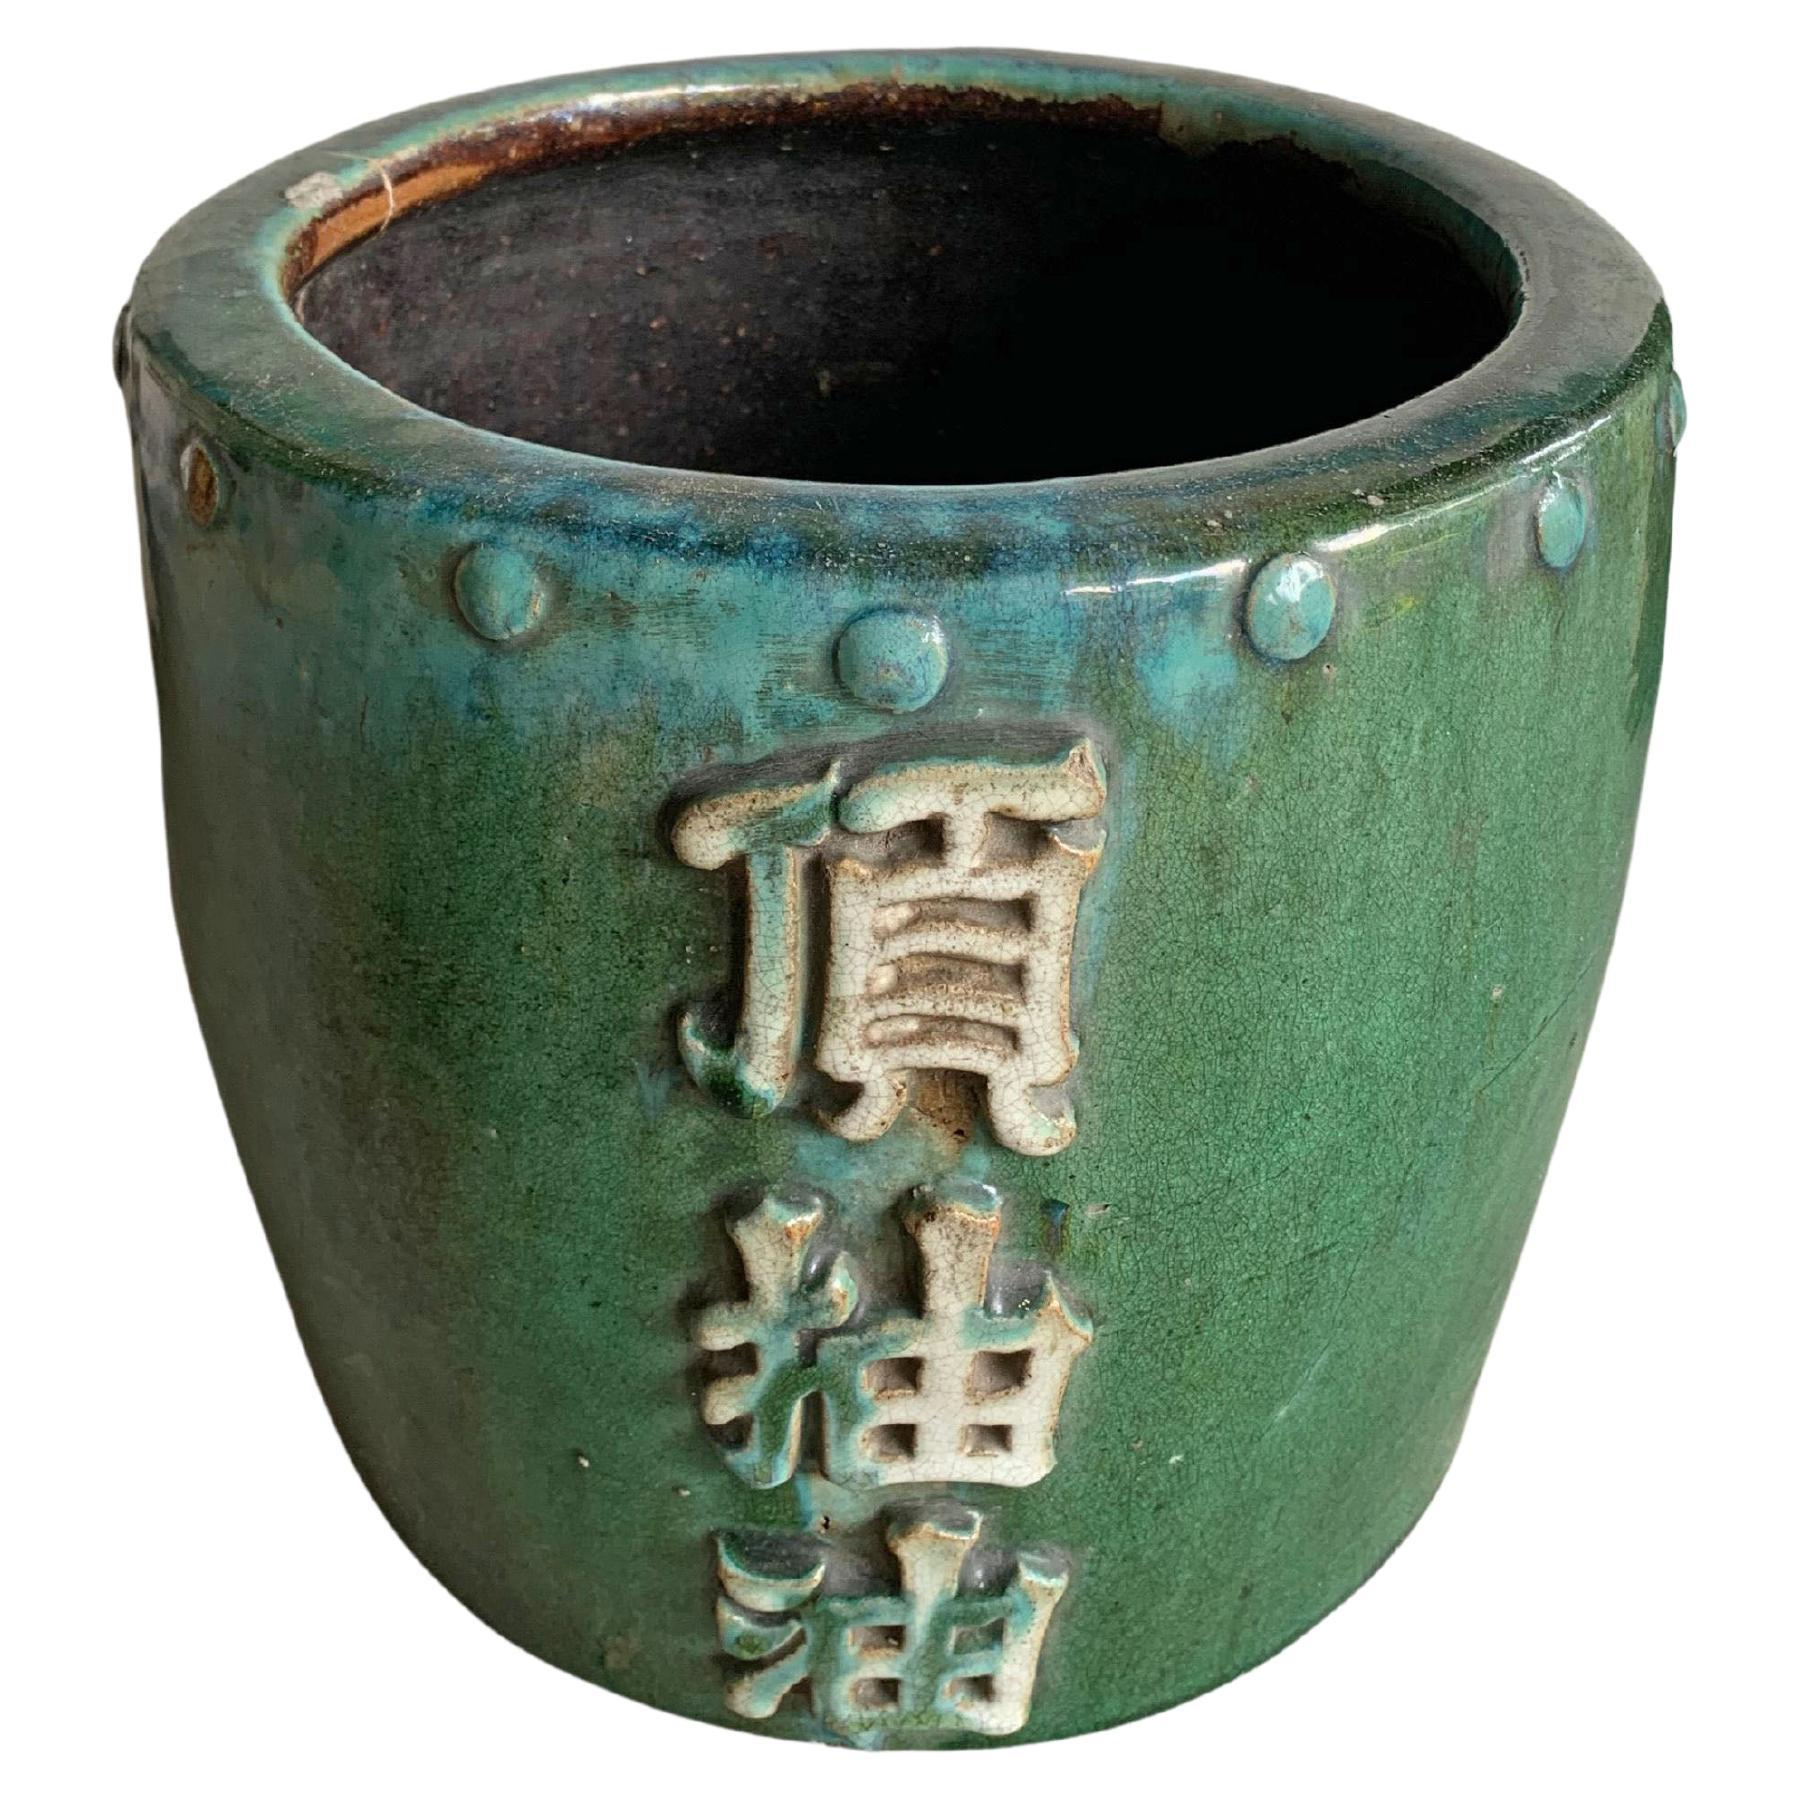 Chinese Green Glazed Ceramic Oil Storage Jar / Planter, c. 1950